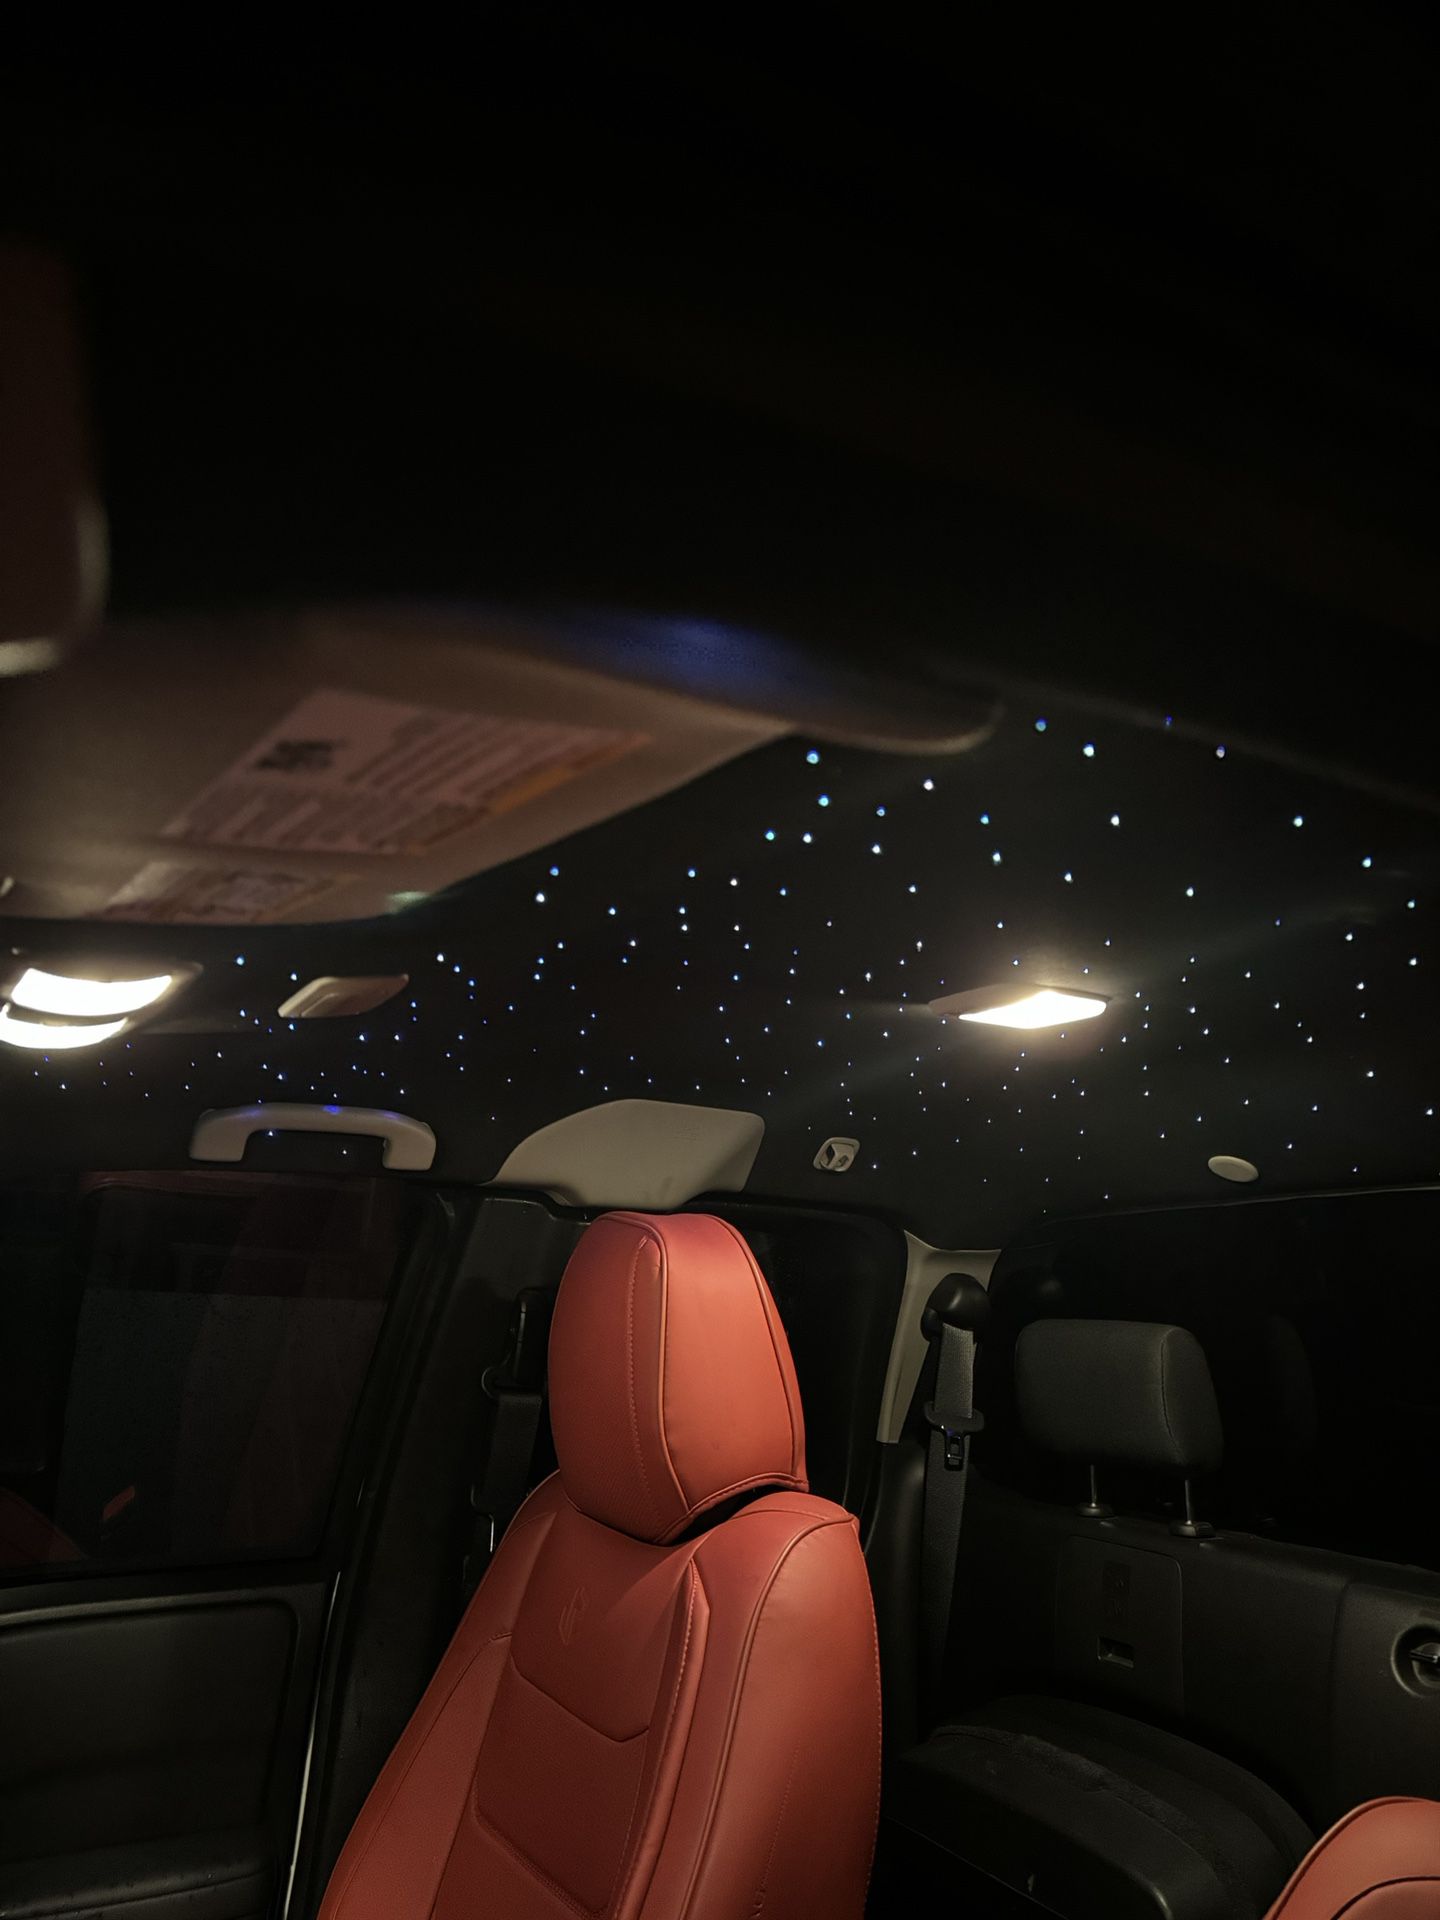 300 Stars For $450 Any Car 